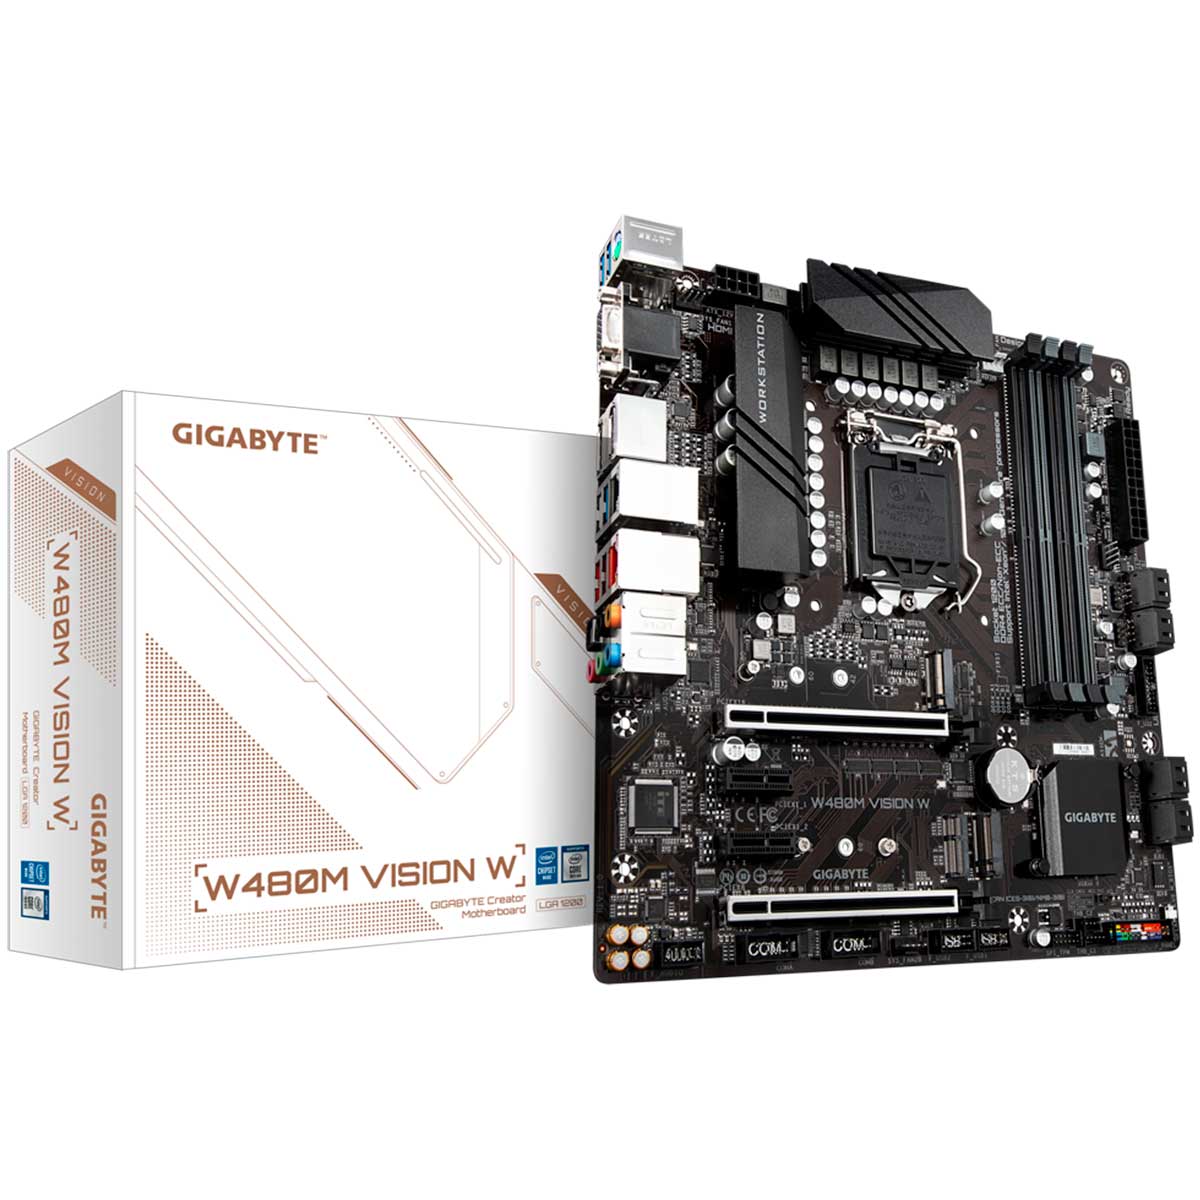 Gigabyte Vision W W480M - (LGA1200 - DDR4 4266 OC) - Chipset Intel W480 Express - USB 3.2